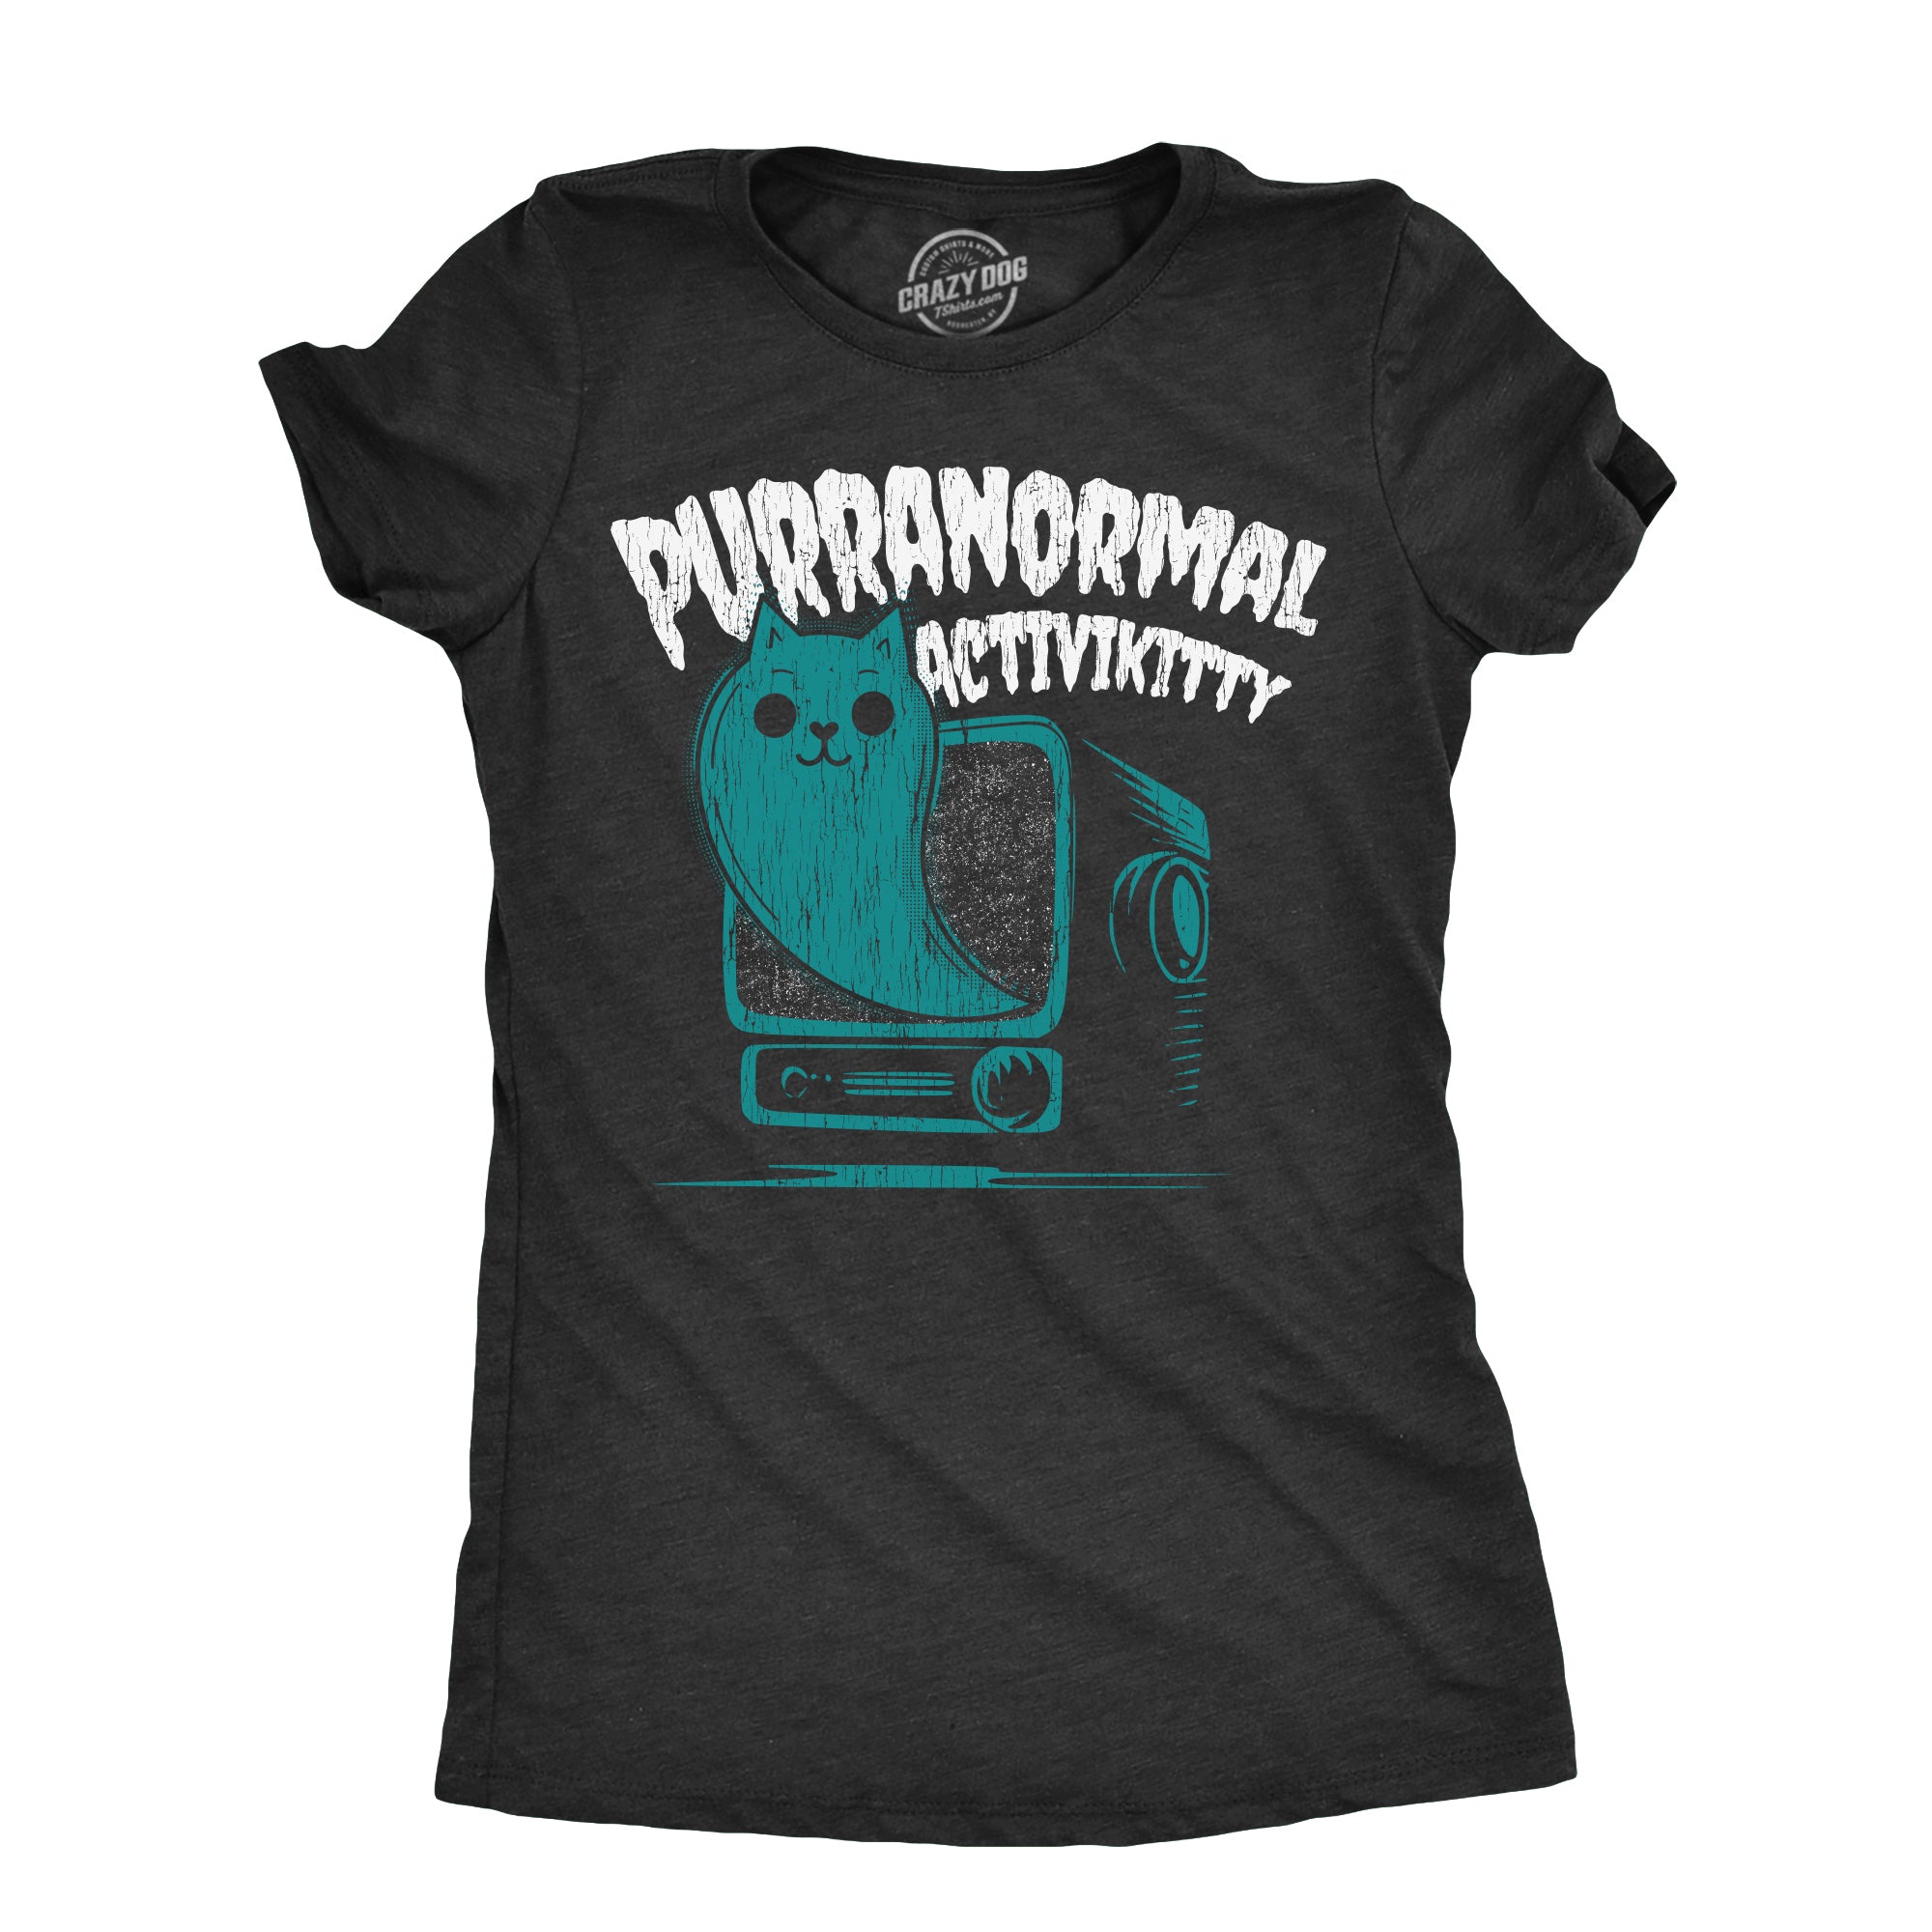 Funny Heather Black - PURRANORMAL Purranormal Activikitty - Paranormal Cat Womens T Shirt Nerdy Halloween Cat Tee